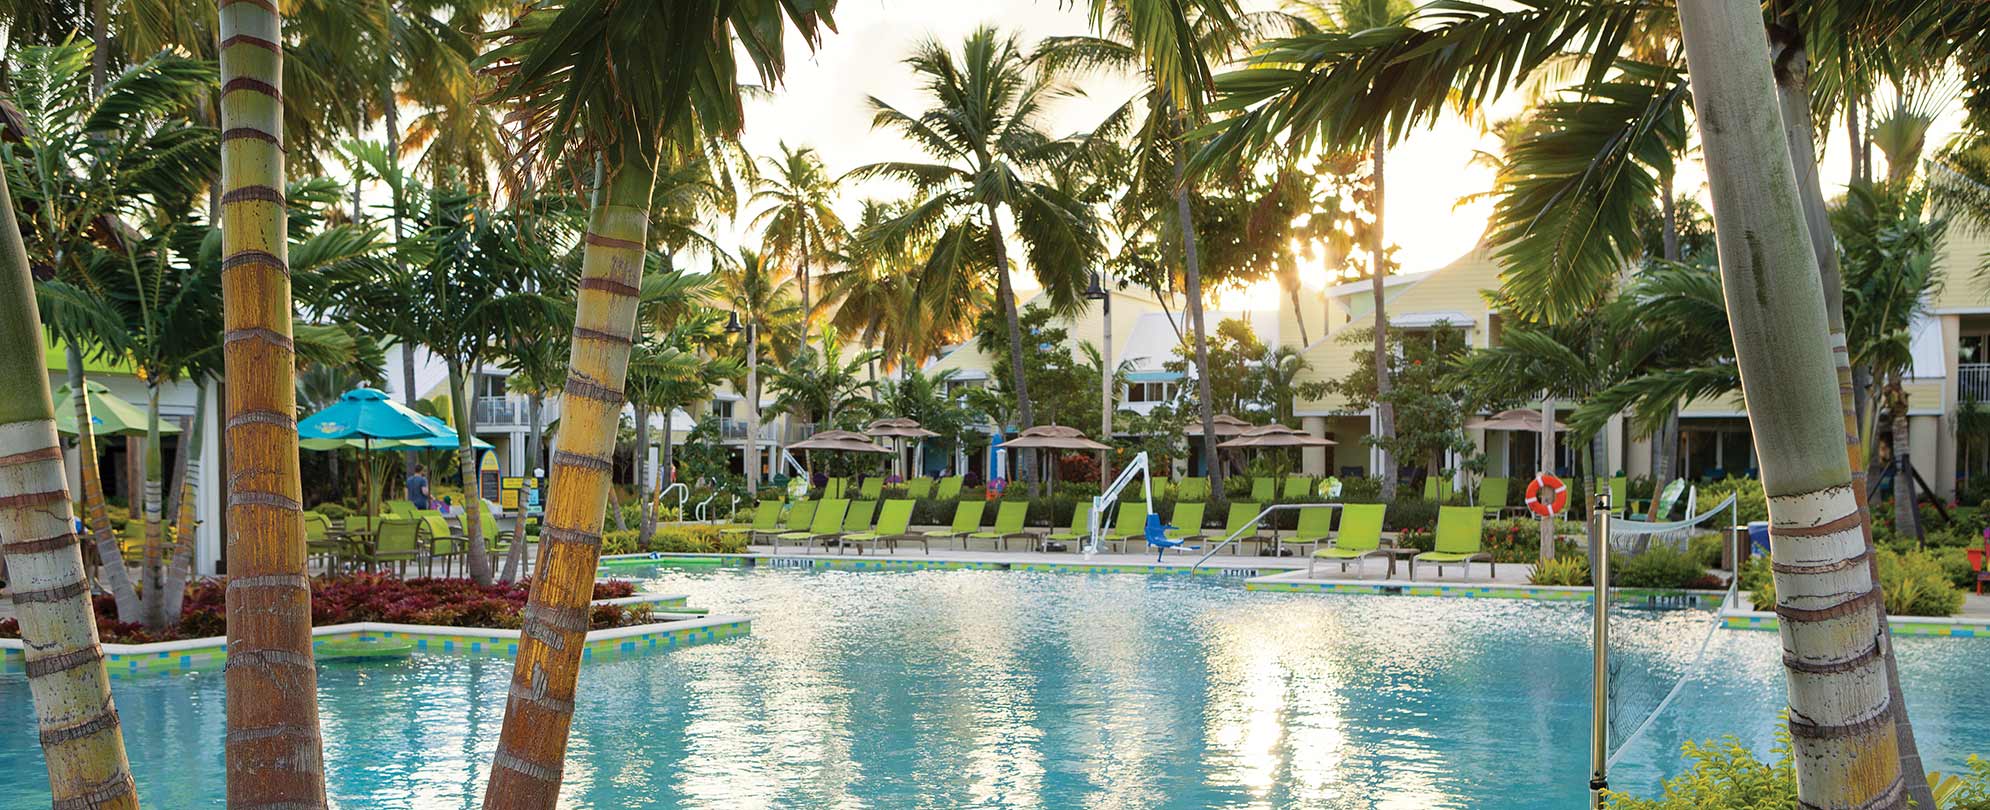 A Margaritaville Vacation Club resort pool area. 